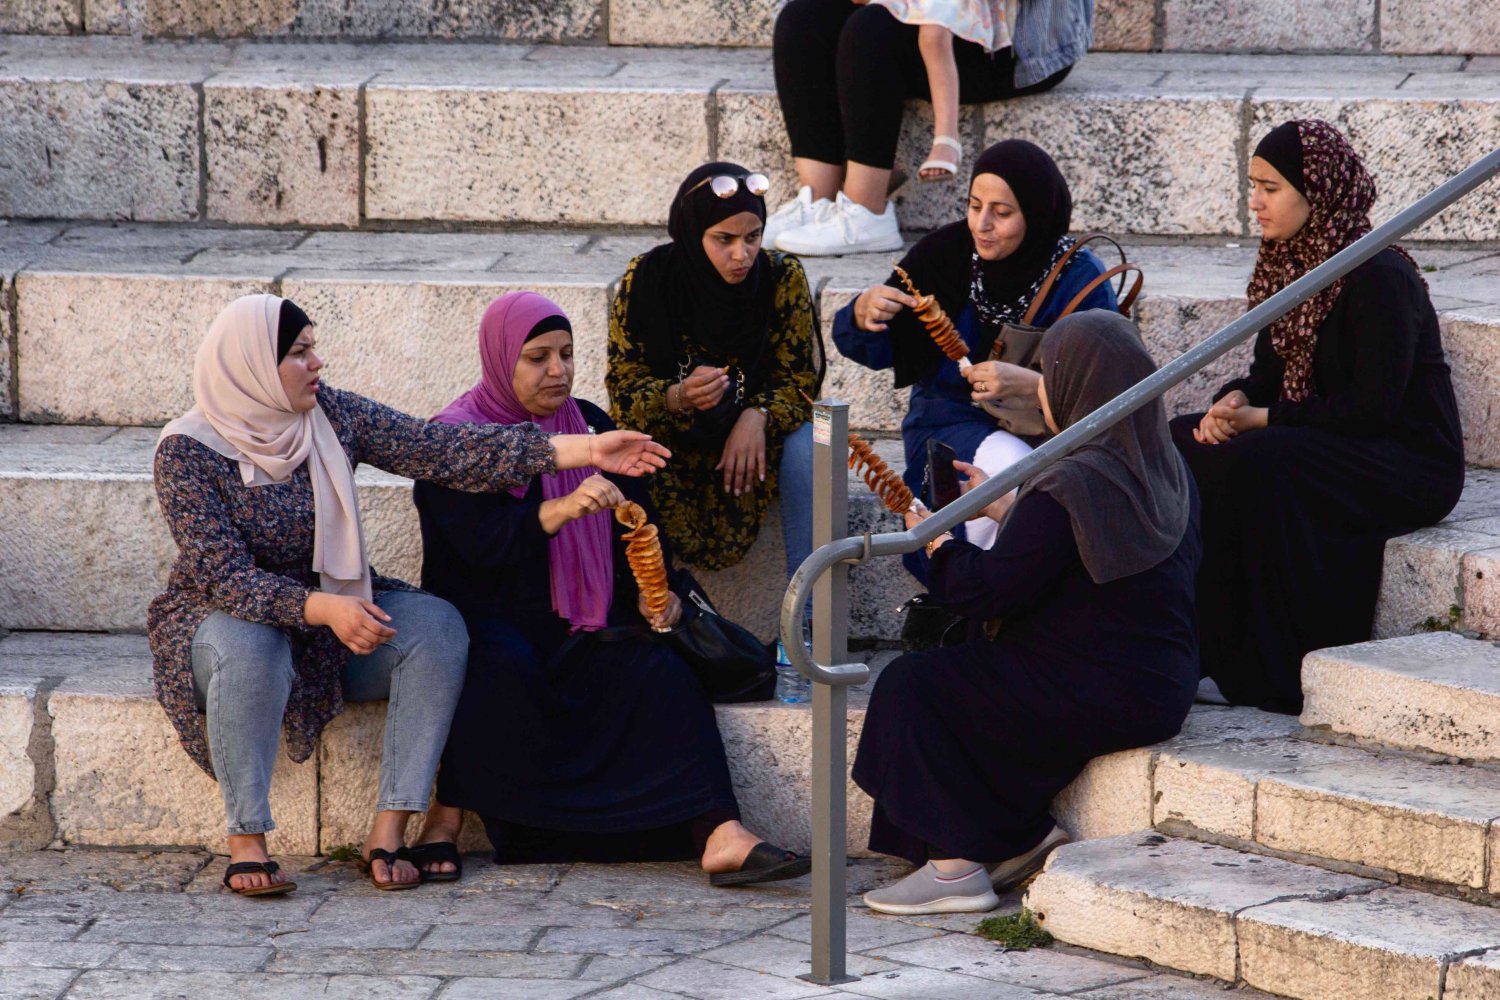 A group of women friends enjoy some chips together on the steps of Bab al-Amud in East Jerusalem, 2021